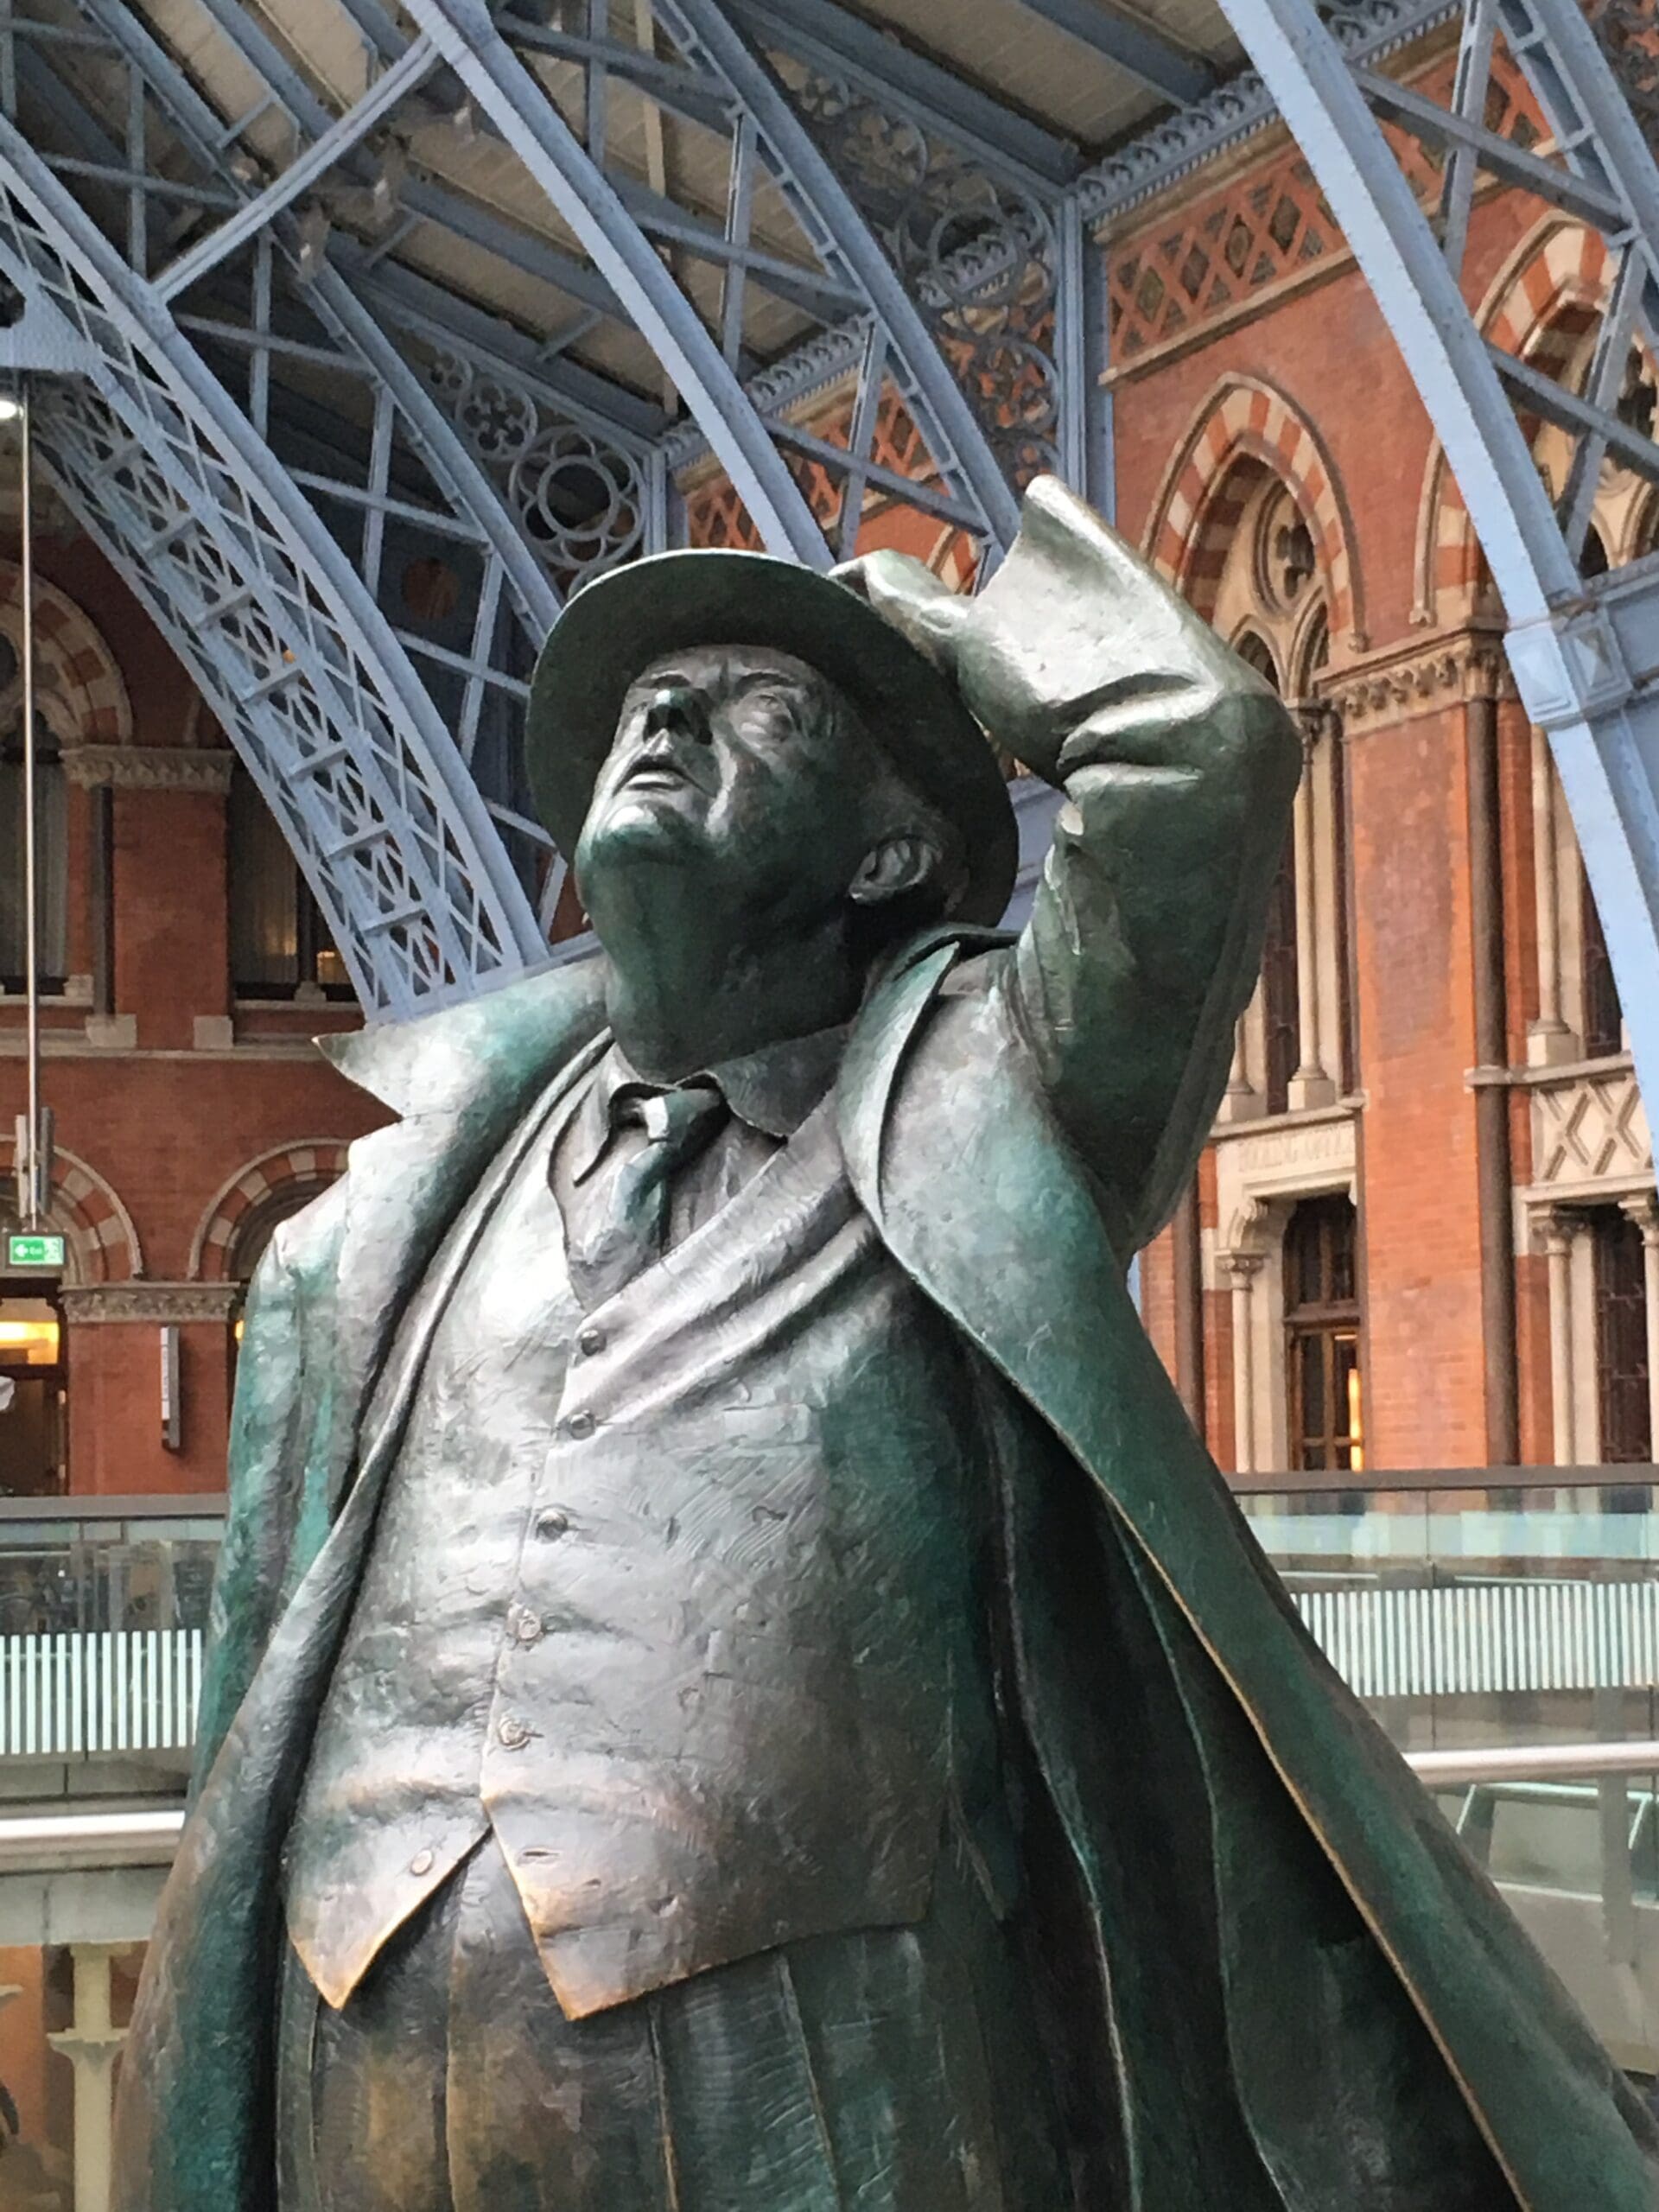 bronze statue of John Betjeman in St Pancras railway station, London